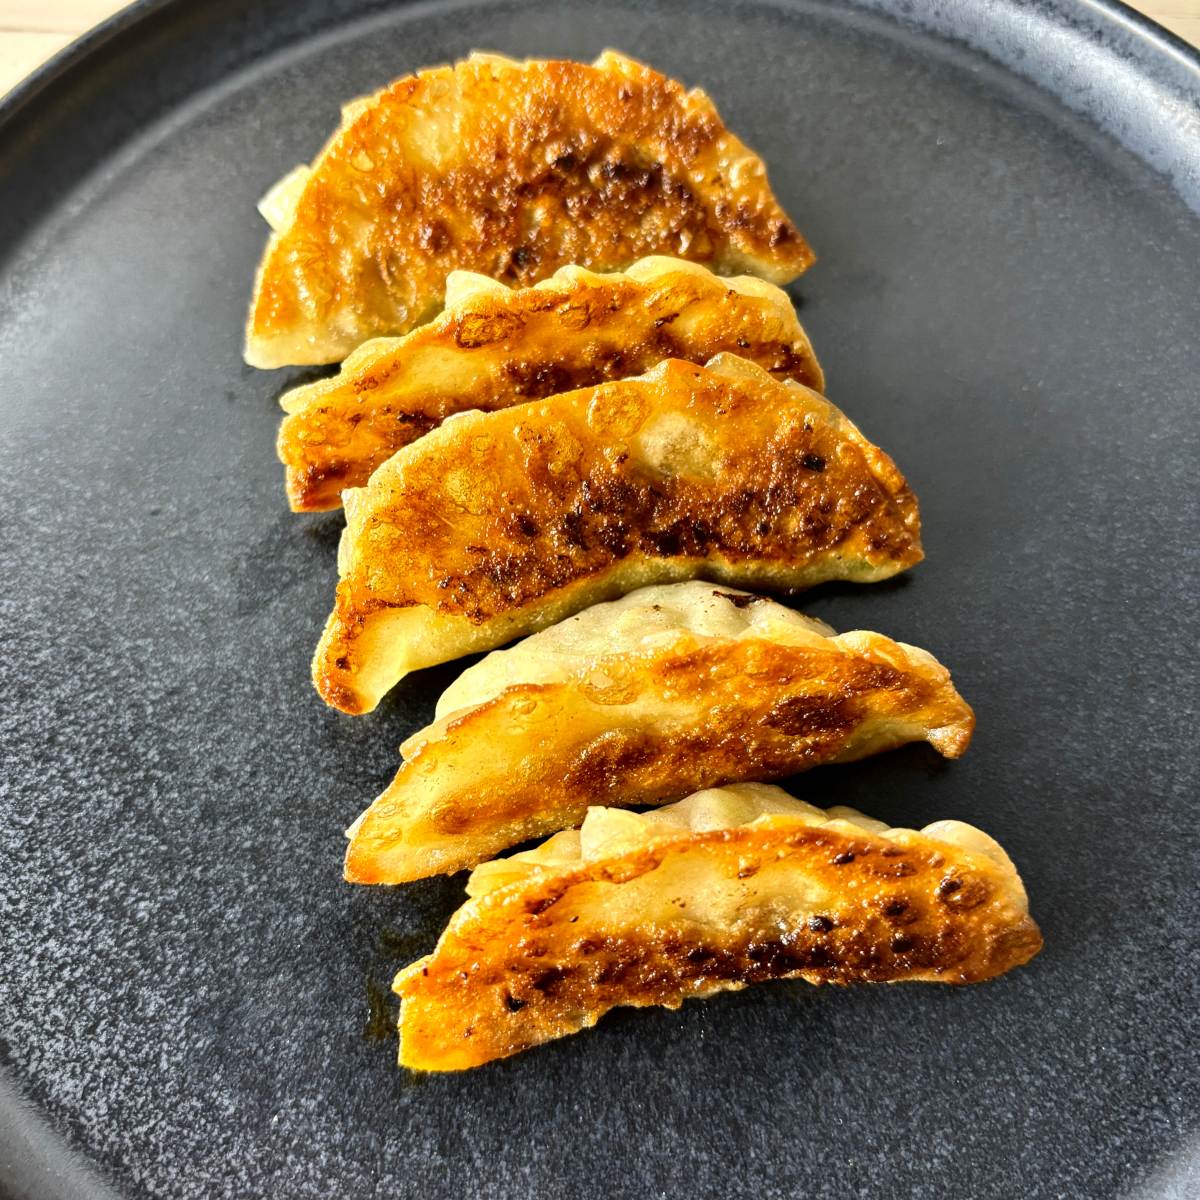 Five crispy-fried gyoza dumplings on a dark charcoal coloured ceramic plate.